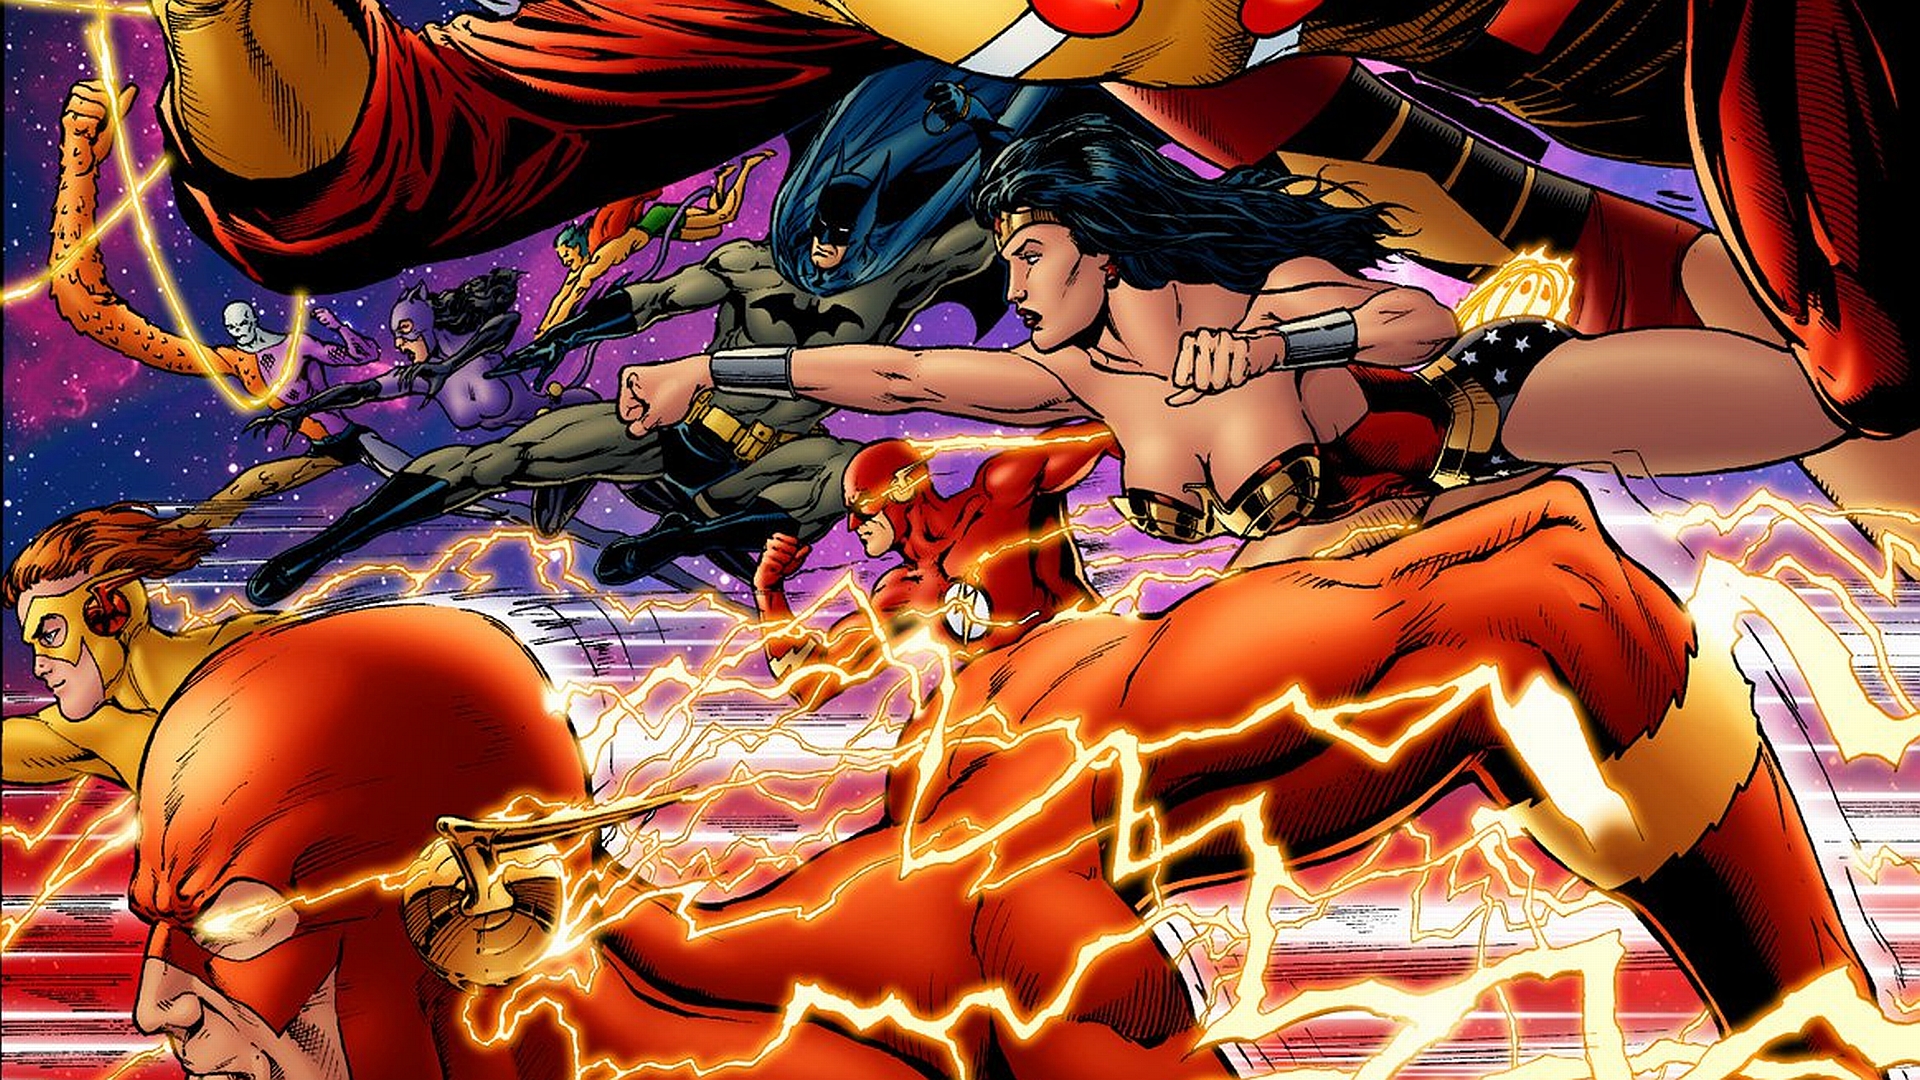 A dynamic ensemble of iconic DC Comics characters, including Batman, Flash, Wonder Woman, Kid Flash, and Catwoman, graces this captivating desktop wallpaper.